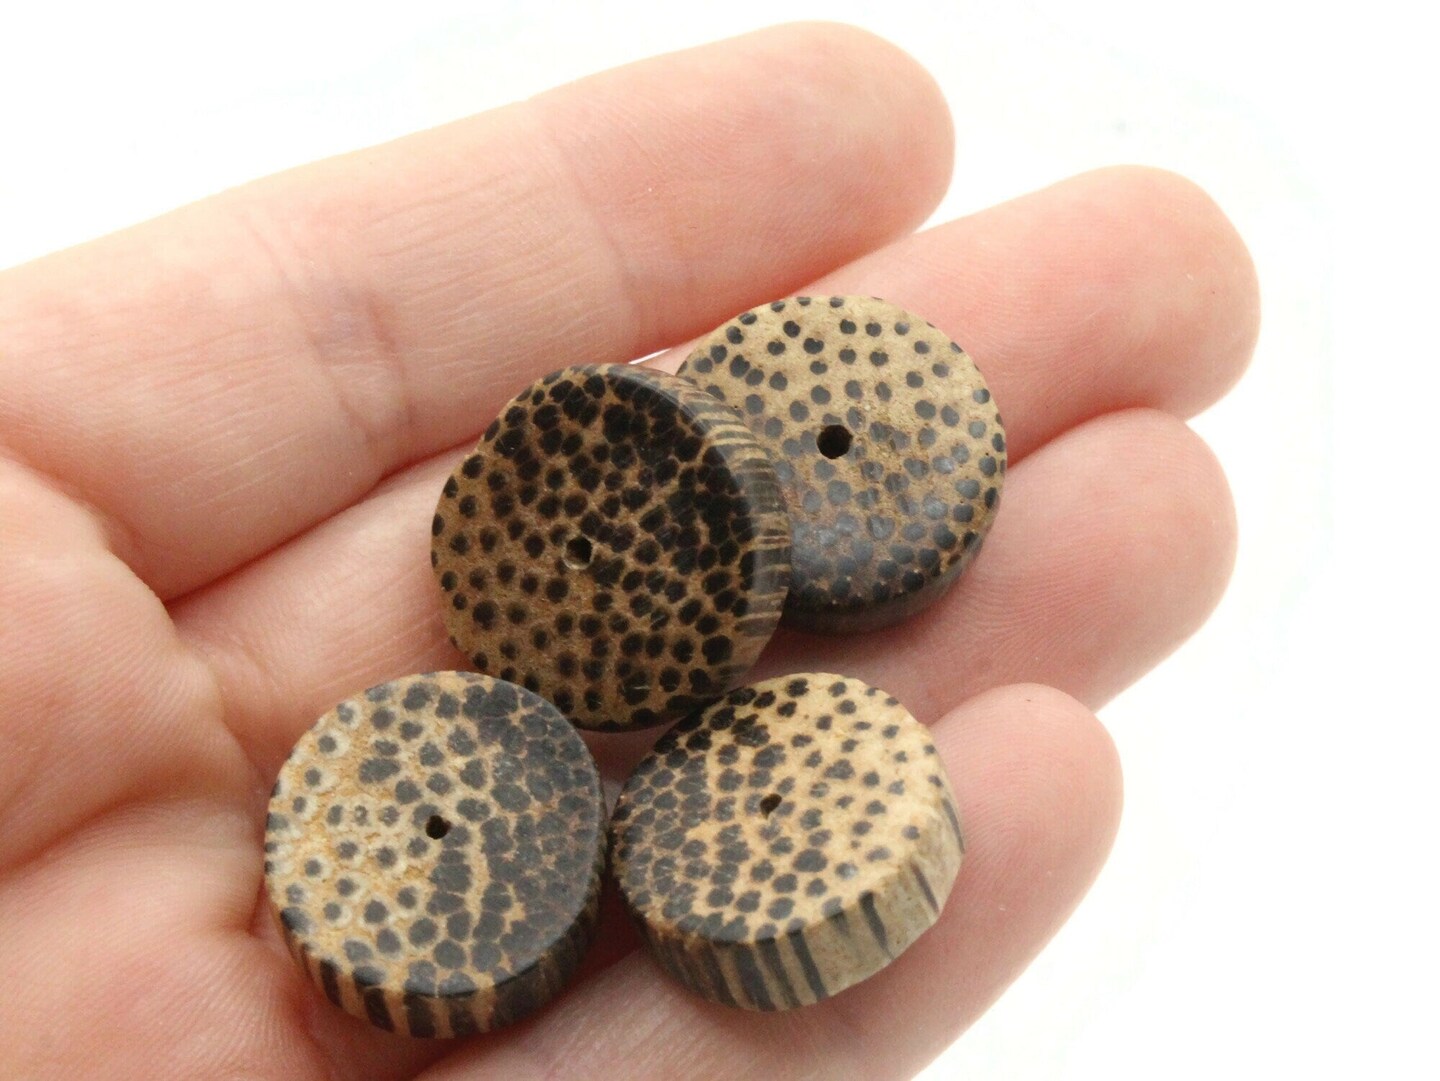 10 19mm Brown Wood Grain Disc Beads Flat Round Beads